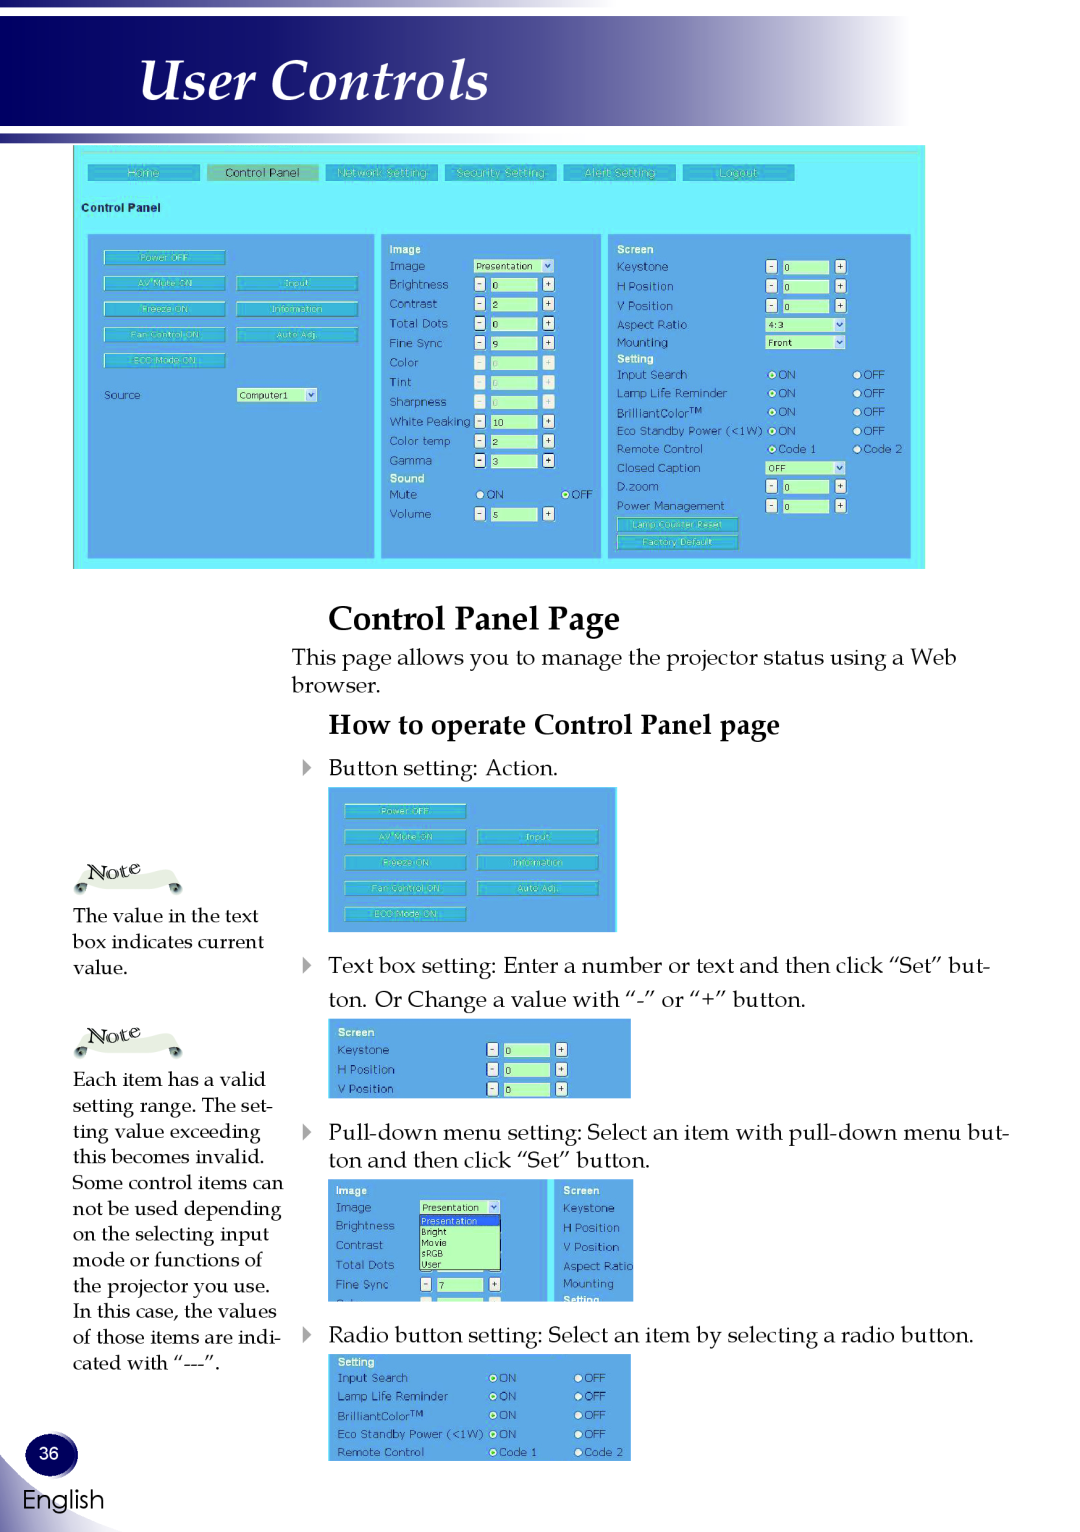 Sanyo PDG-DWL100 owner manual Control Panel Page, User Controls, How to operate Control Panel page 